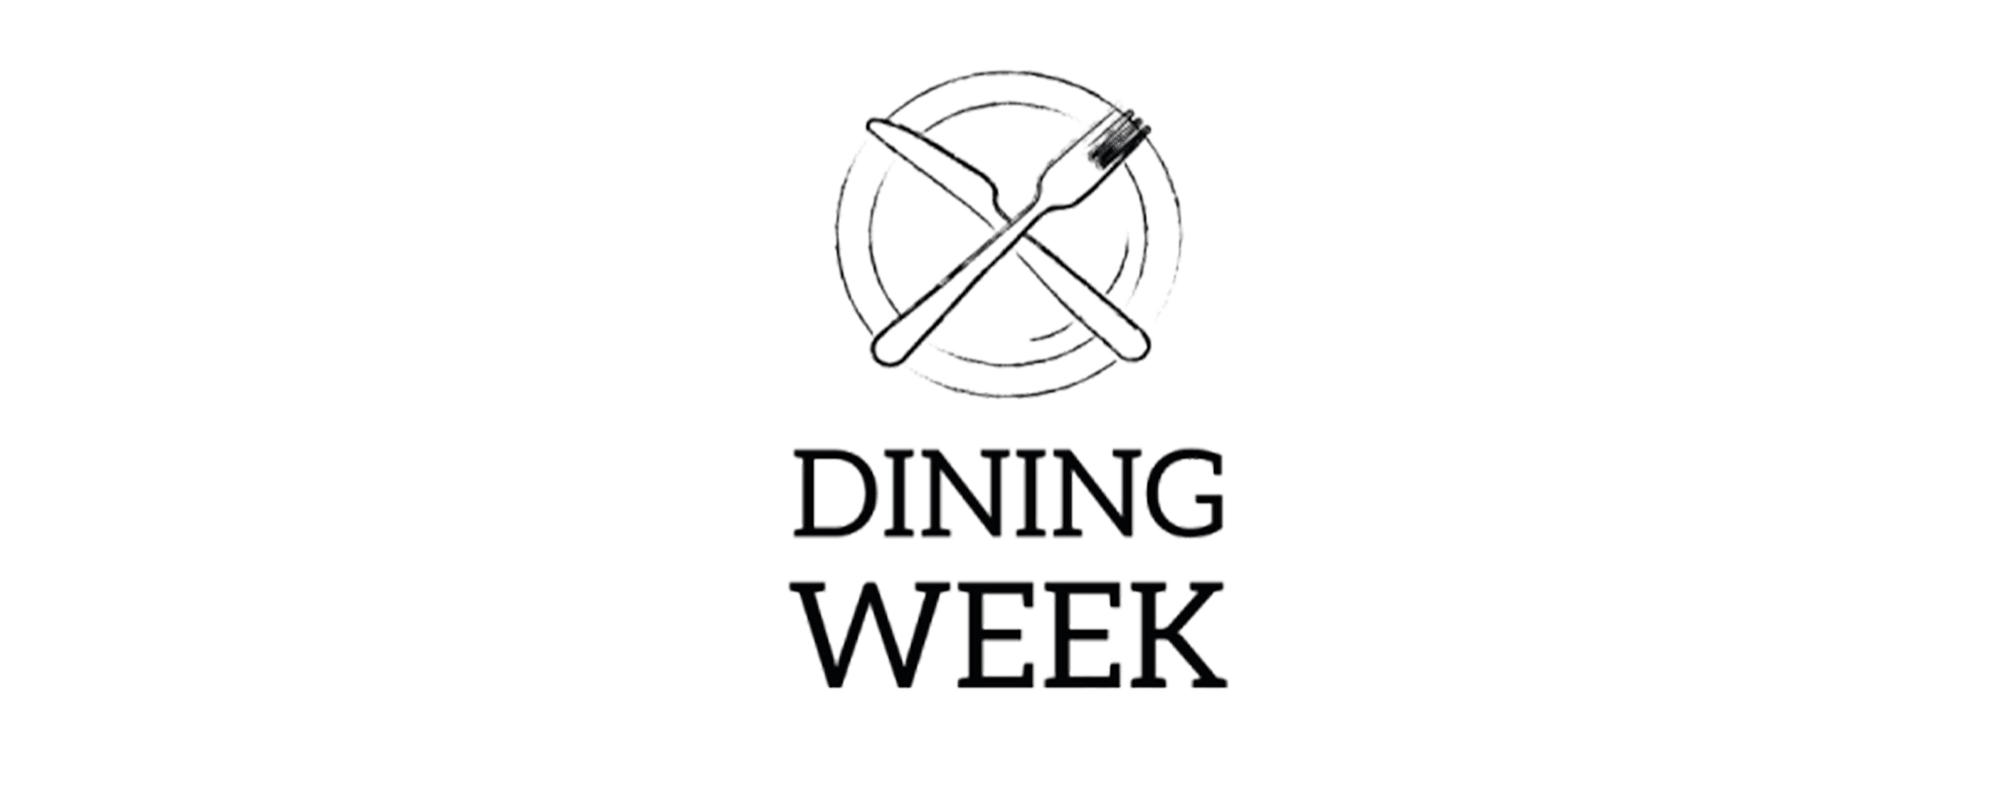 Dining week2